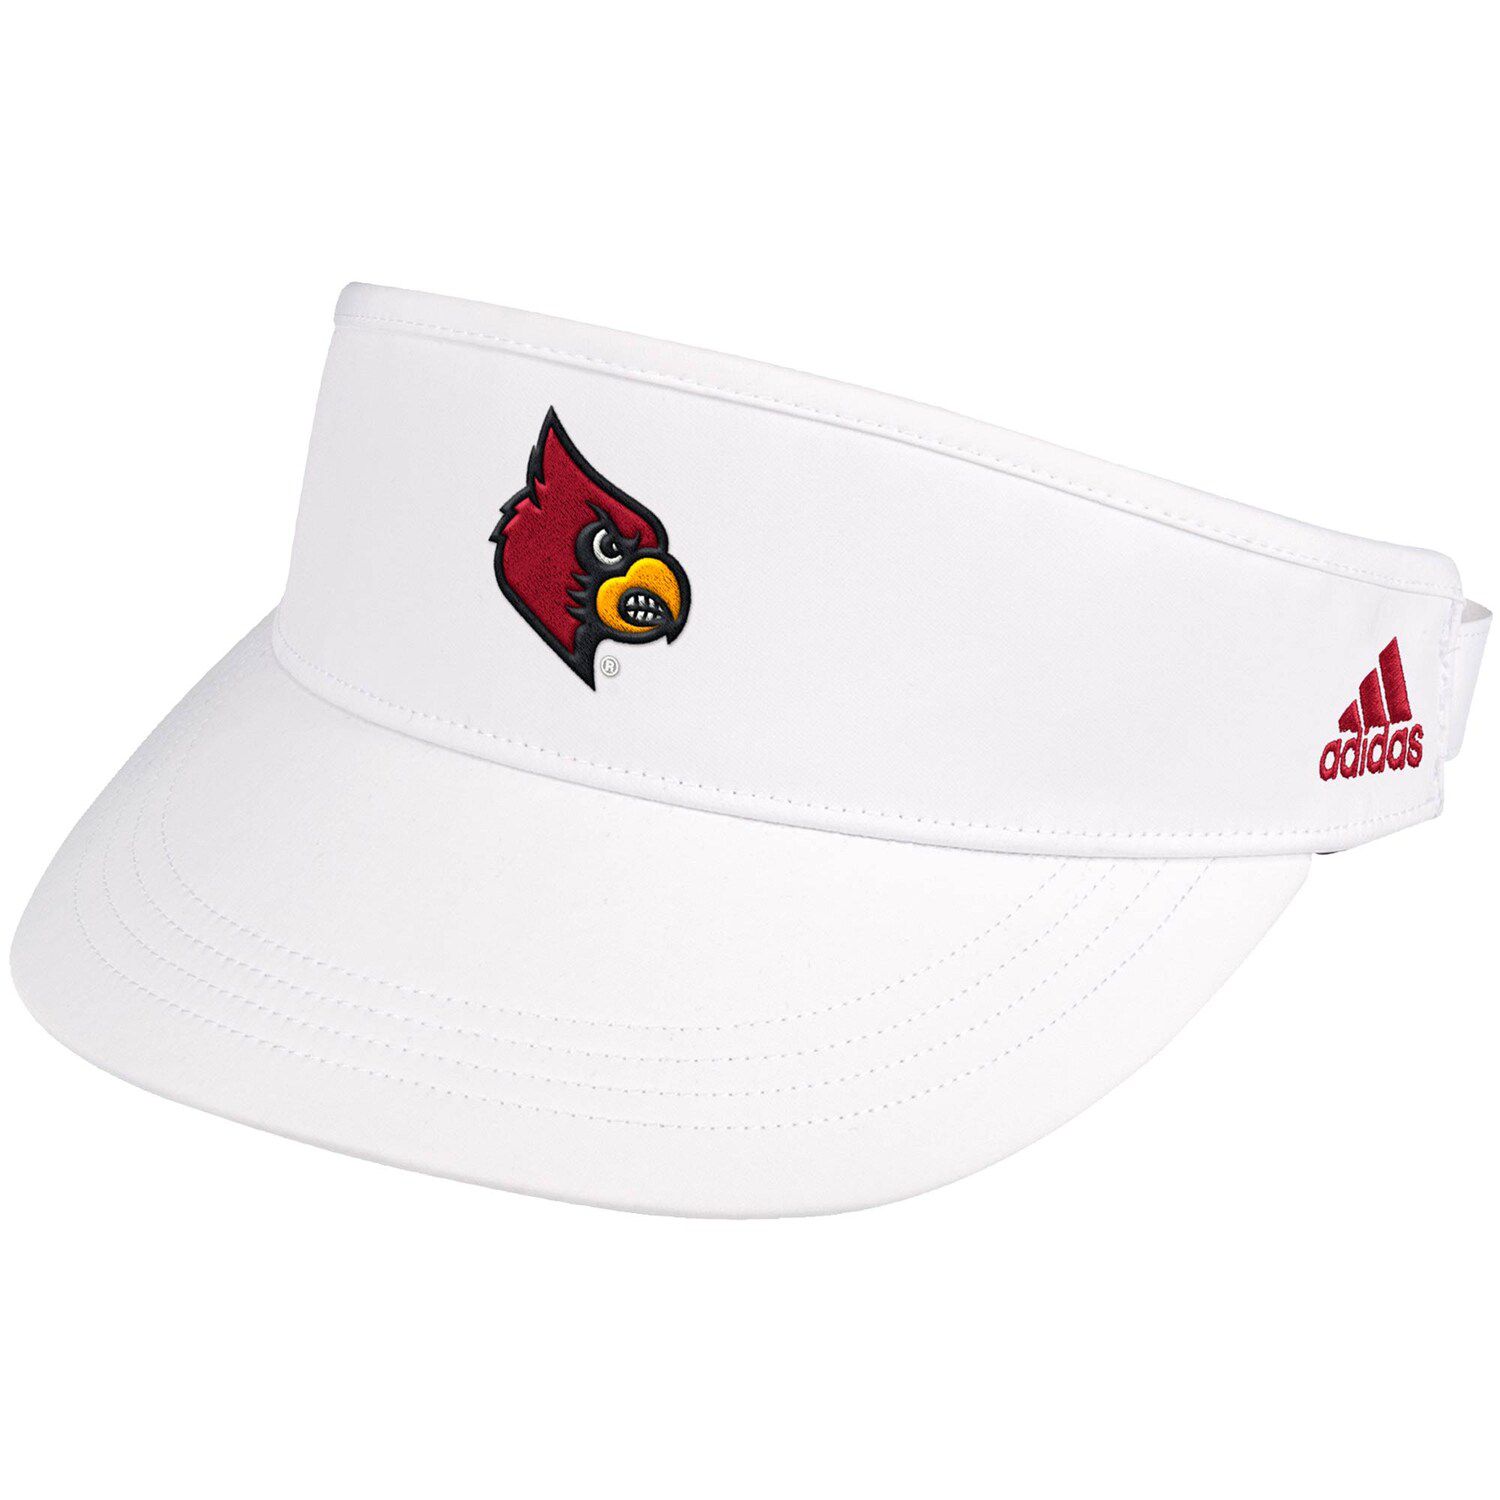 Men's adidas Black Louisville Cardinals Sideline Snapback Hat